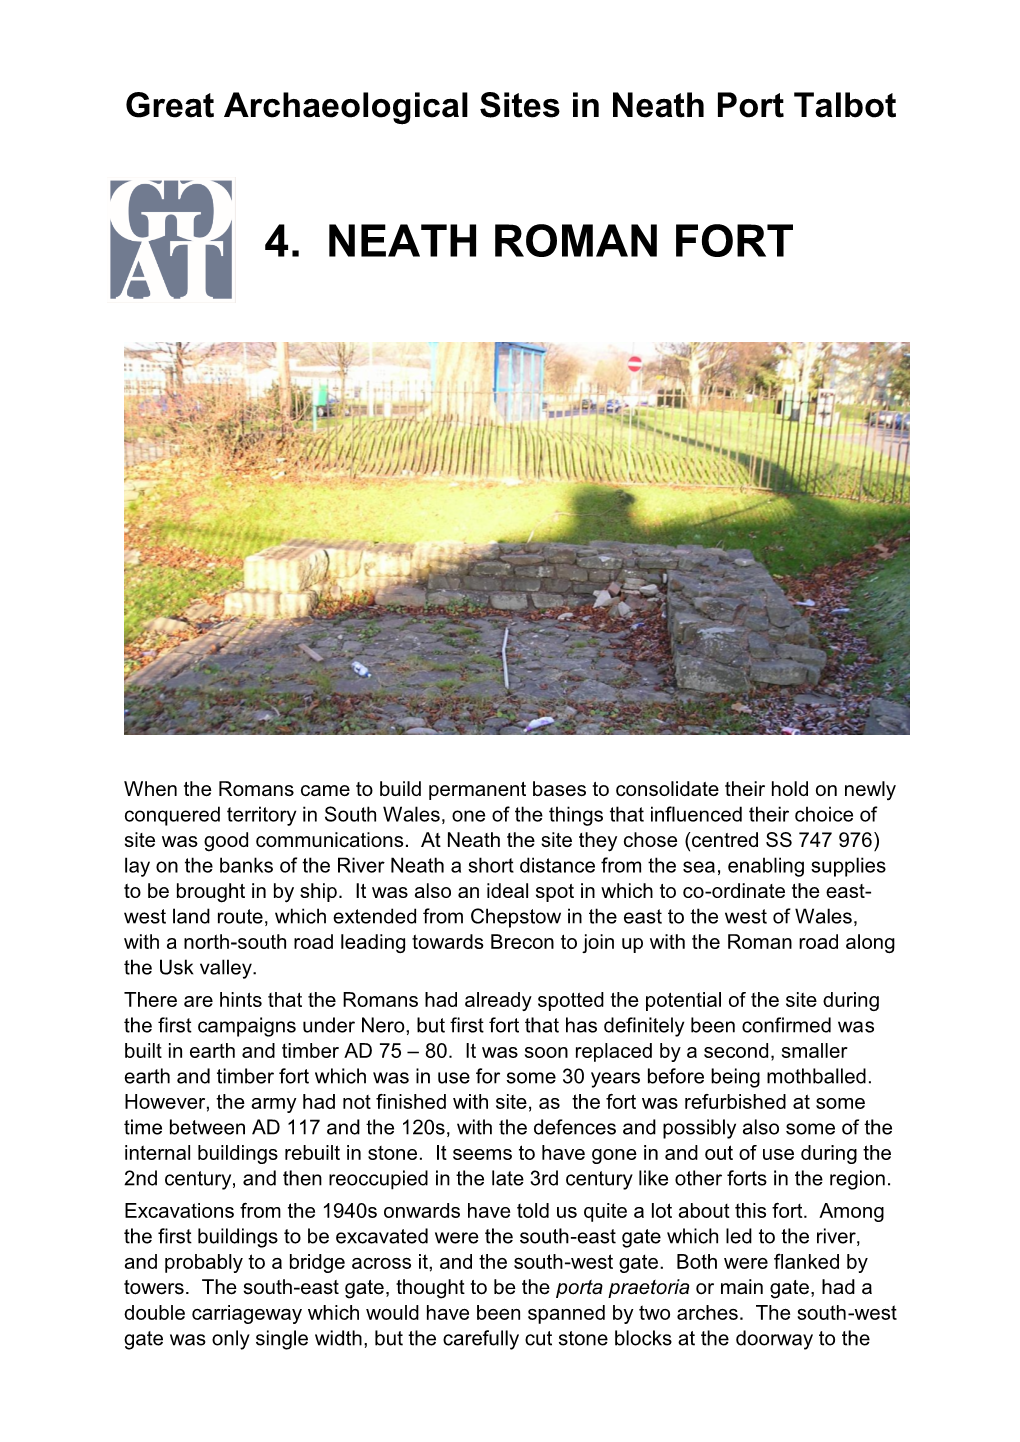 4. Neath Roman Fort